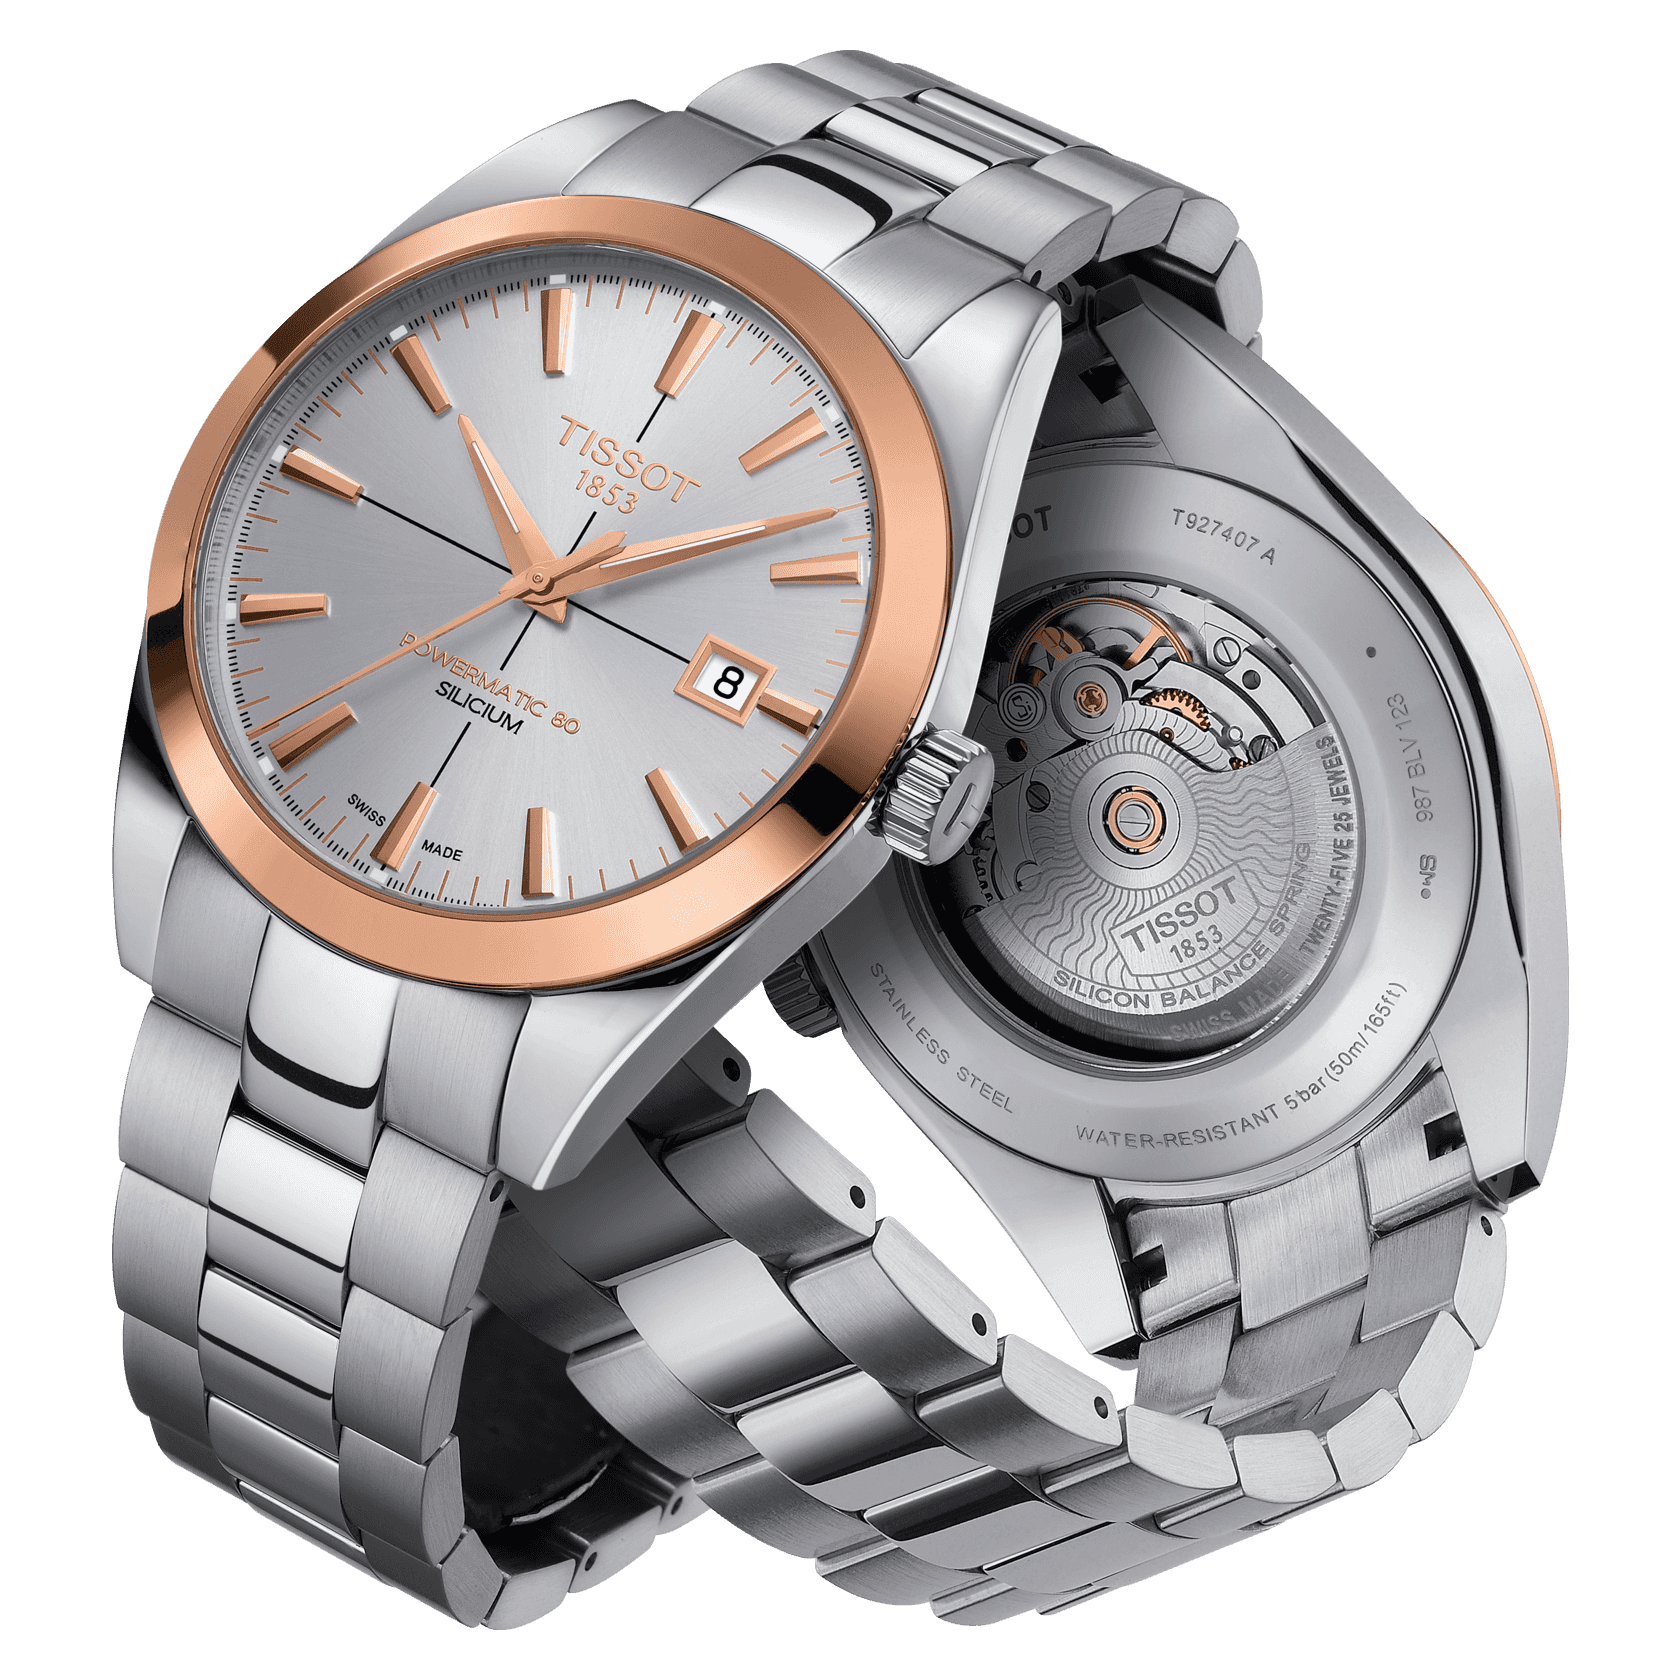 Wholesale Panerai Watches Replicas